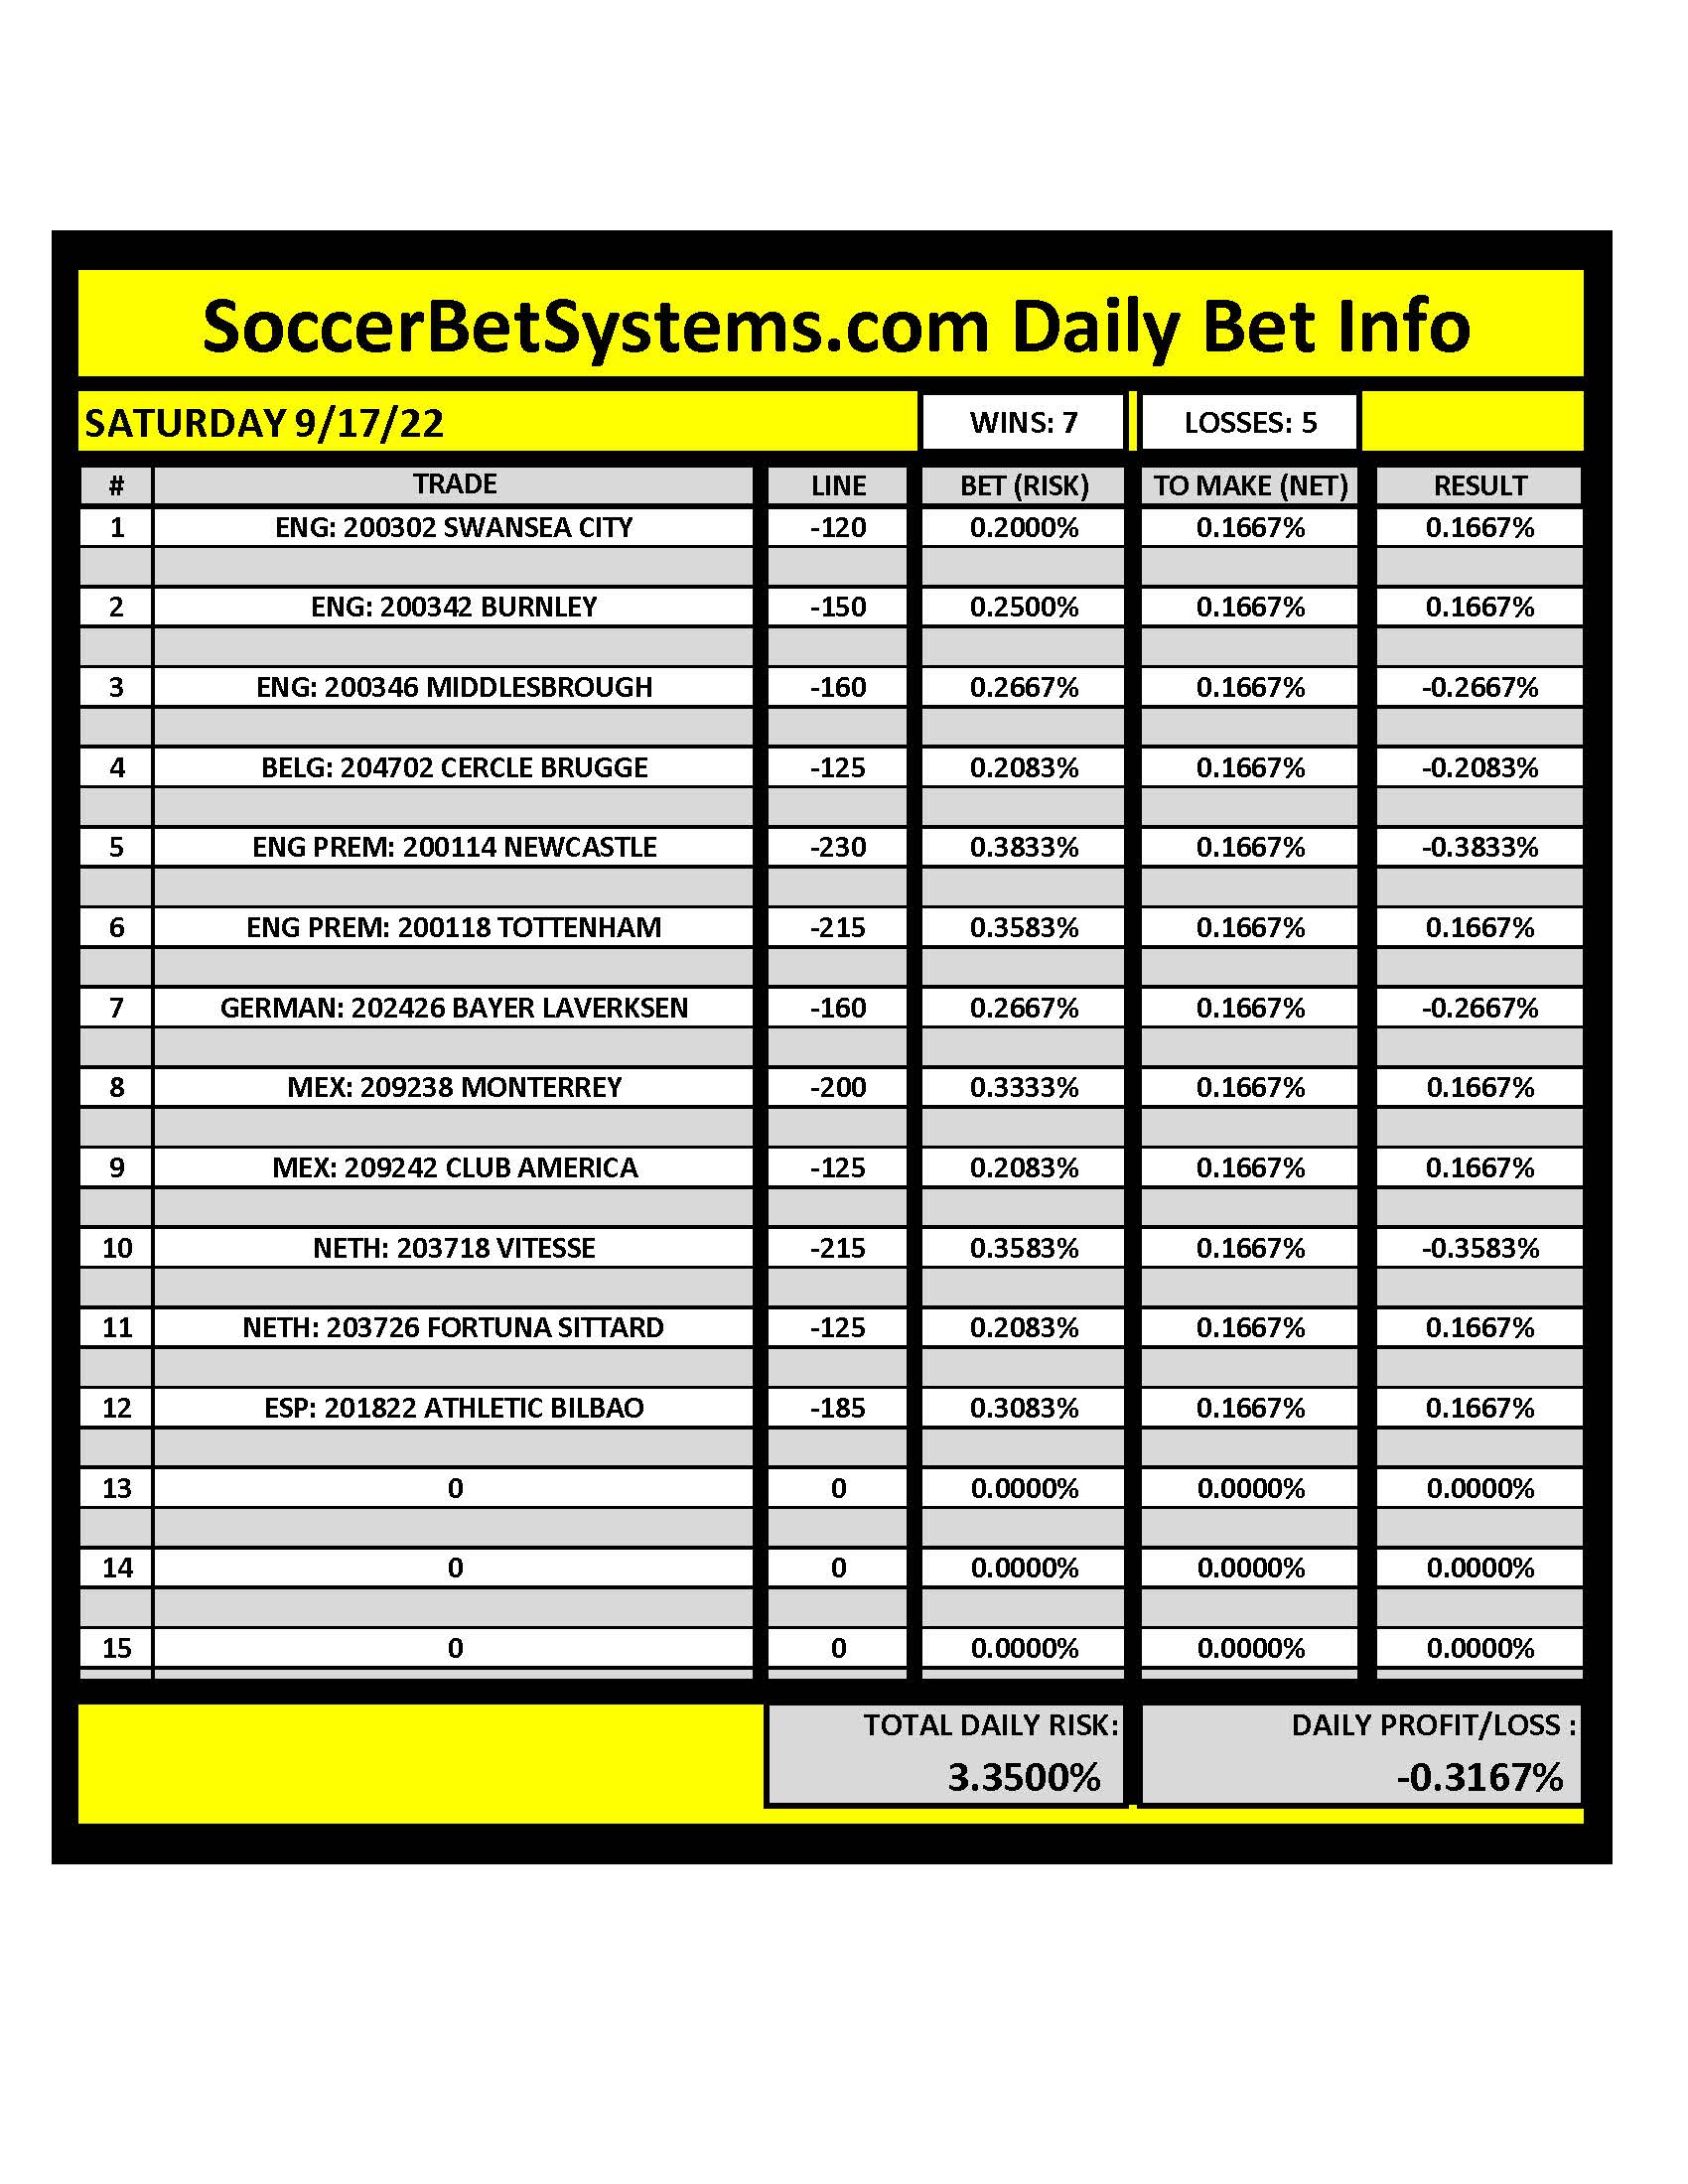 SoccerBetSystems.com 9/17/22 Daily Results